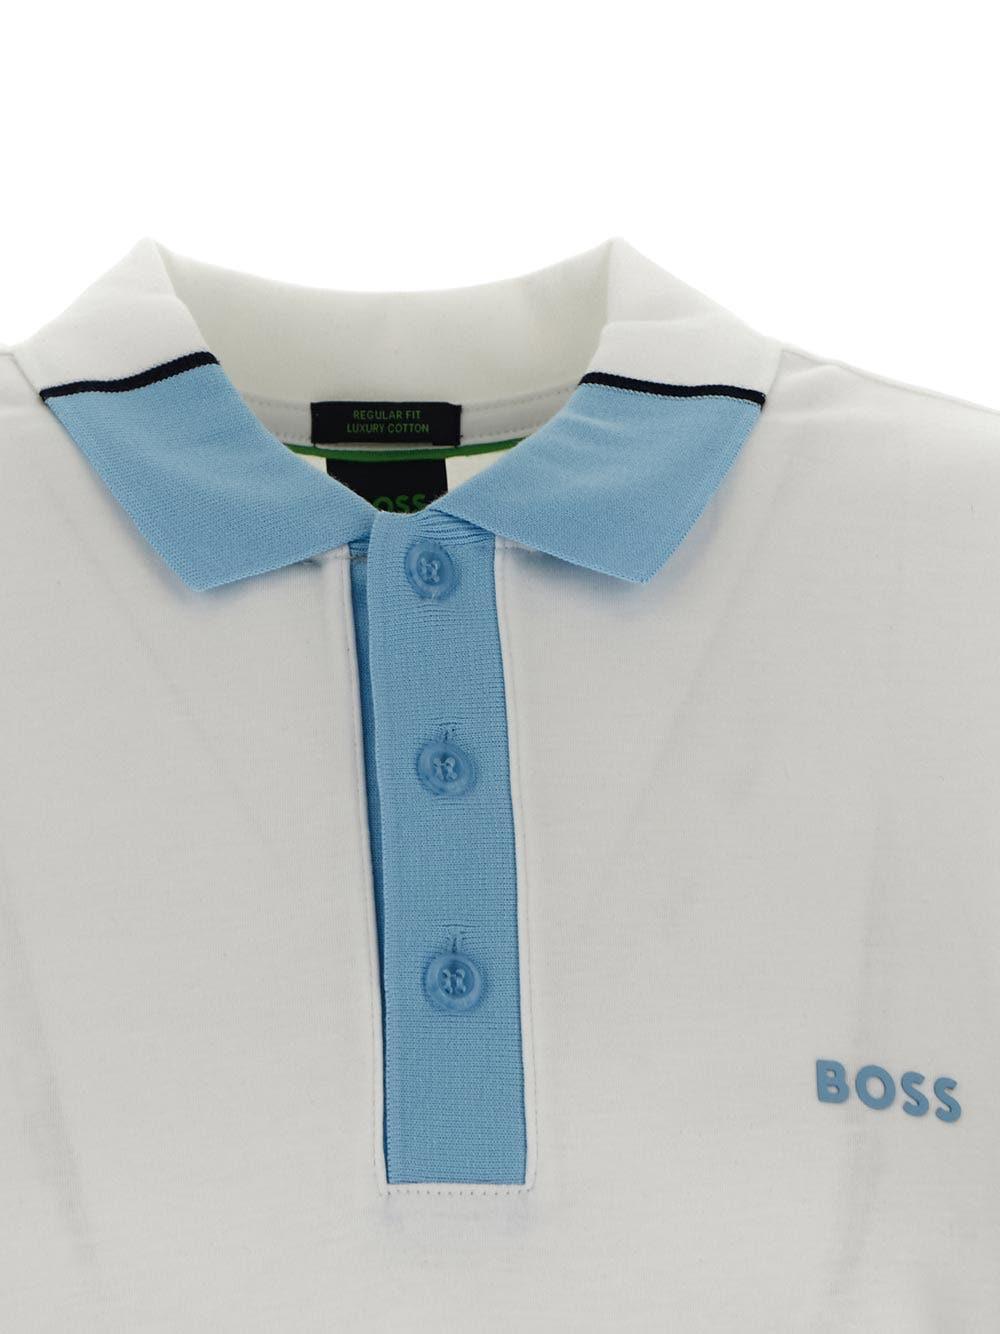 BOSS by HUGO BOSS Luxury Cotton Polo Shirt in White for Men | Lyst